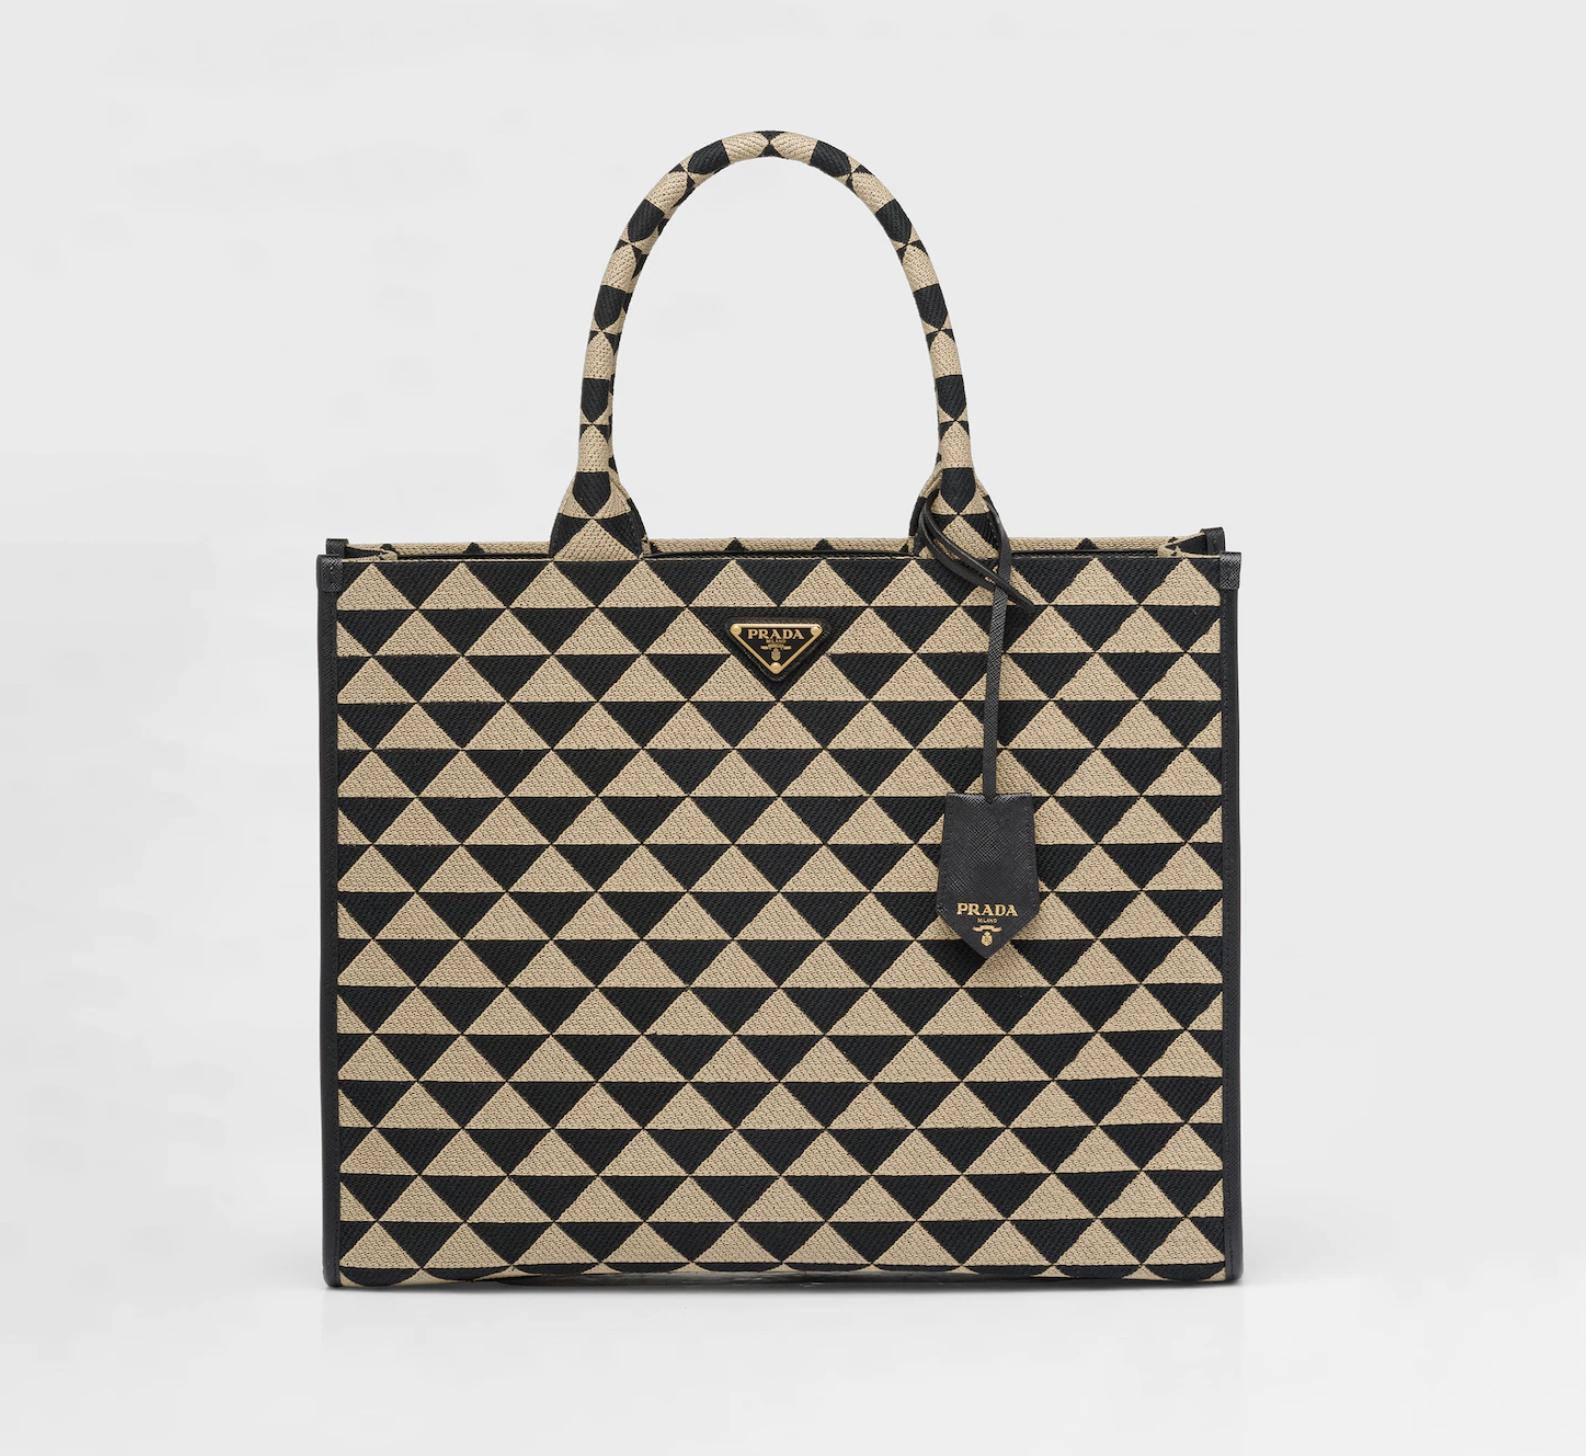 Handbag Brands for Your Style  Macys Perfect Handbag